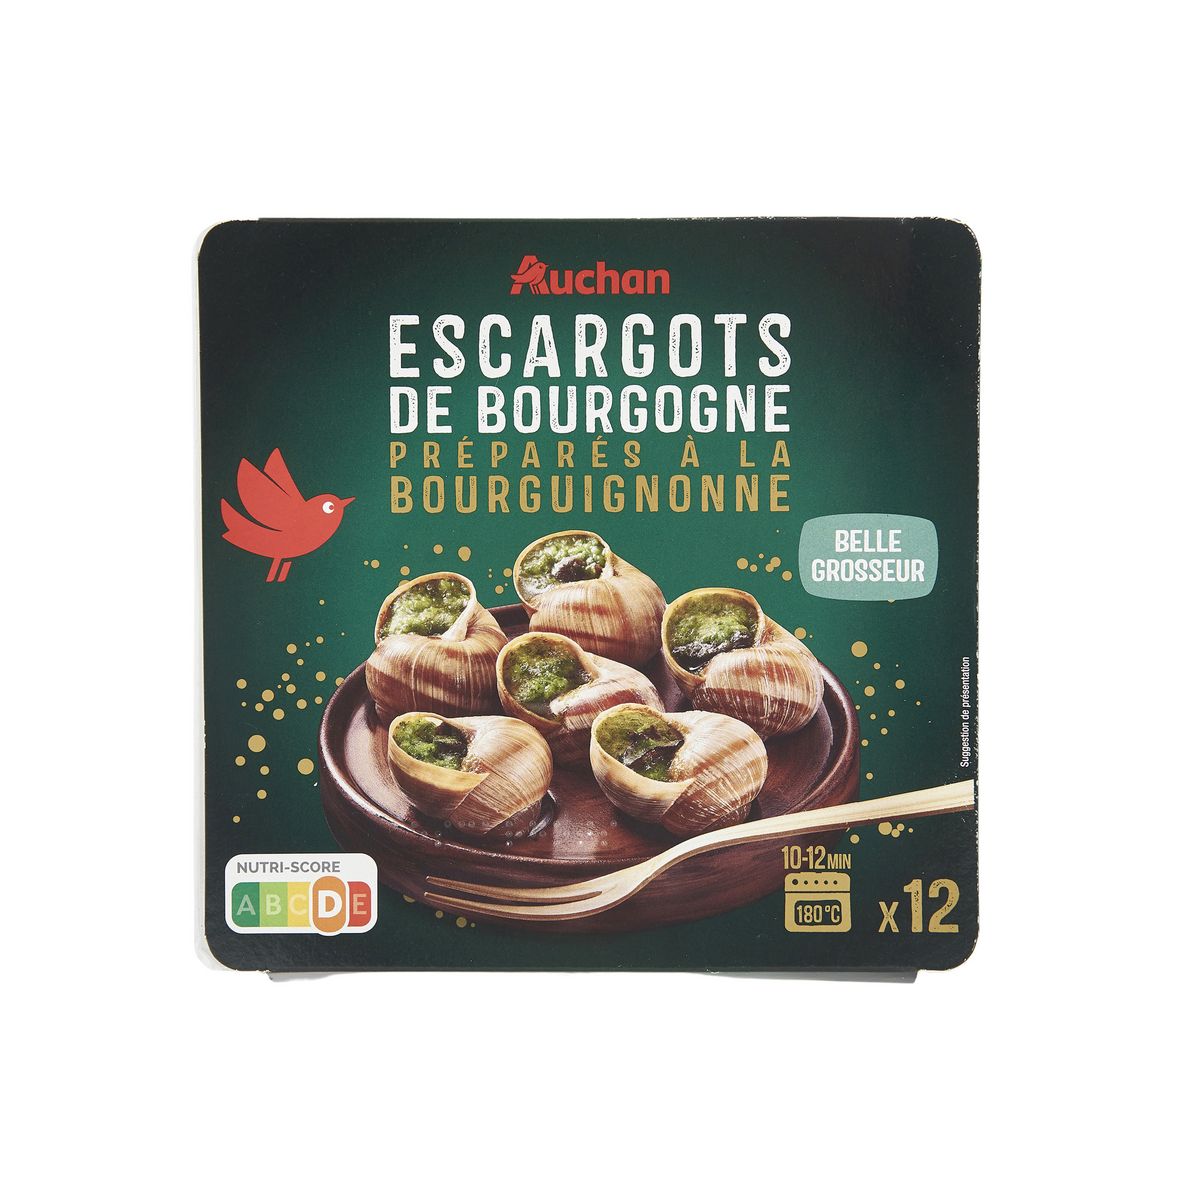 Assiette de 12 escargots de Bourgogne - Belle grosseur Bourgogne